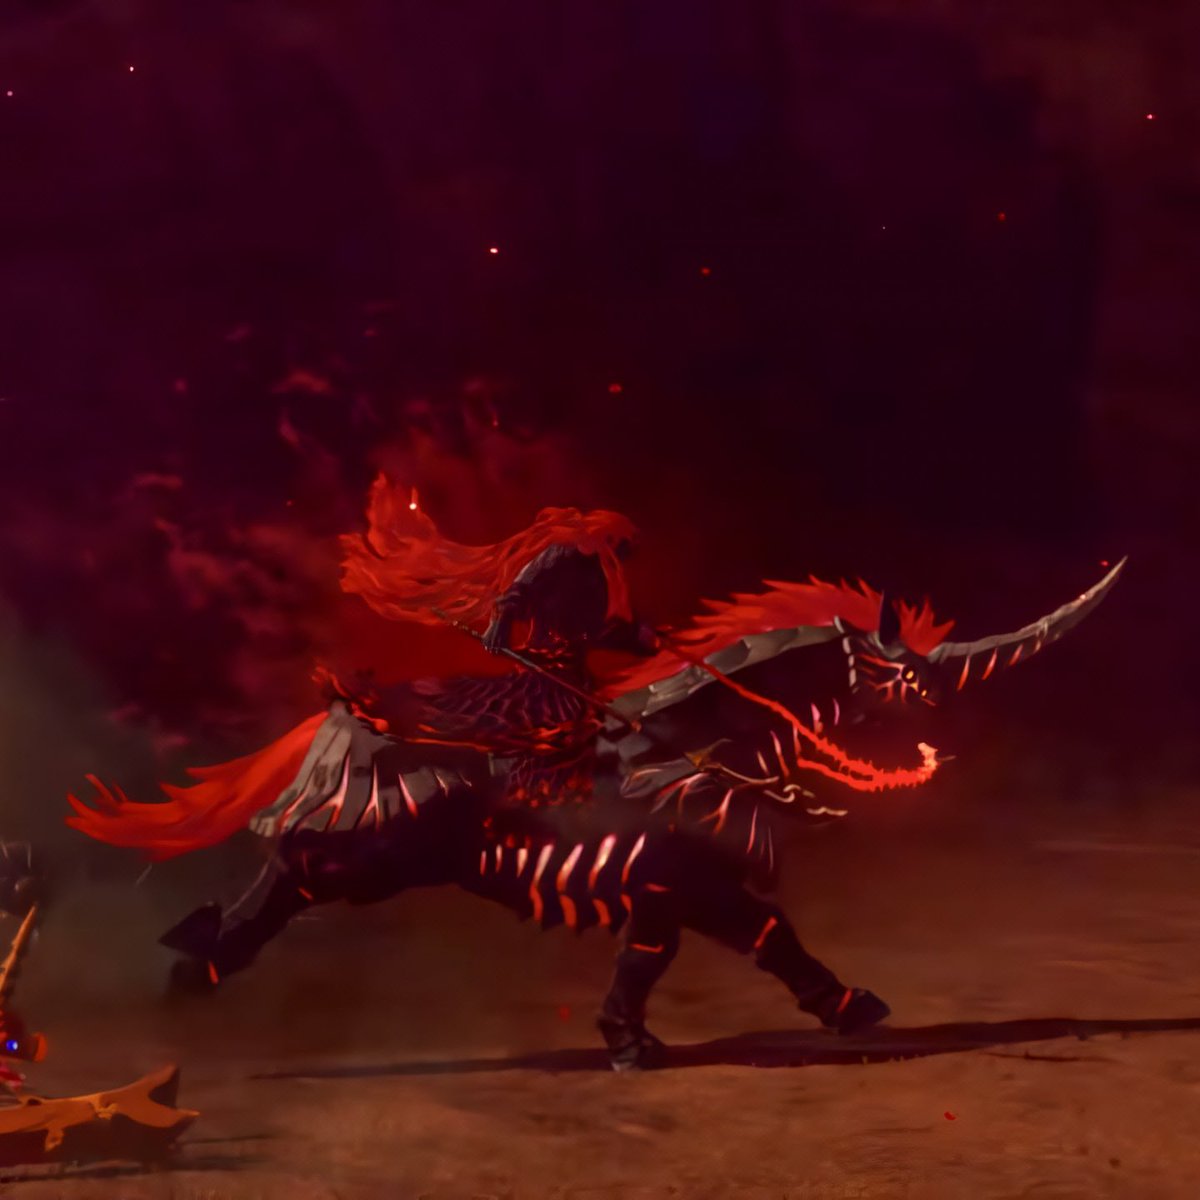 Look how happy Ganondorf is to be riding his demonic unicorn into battle